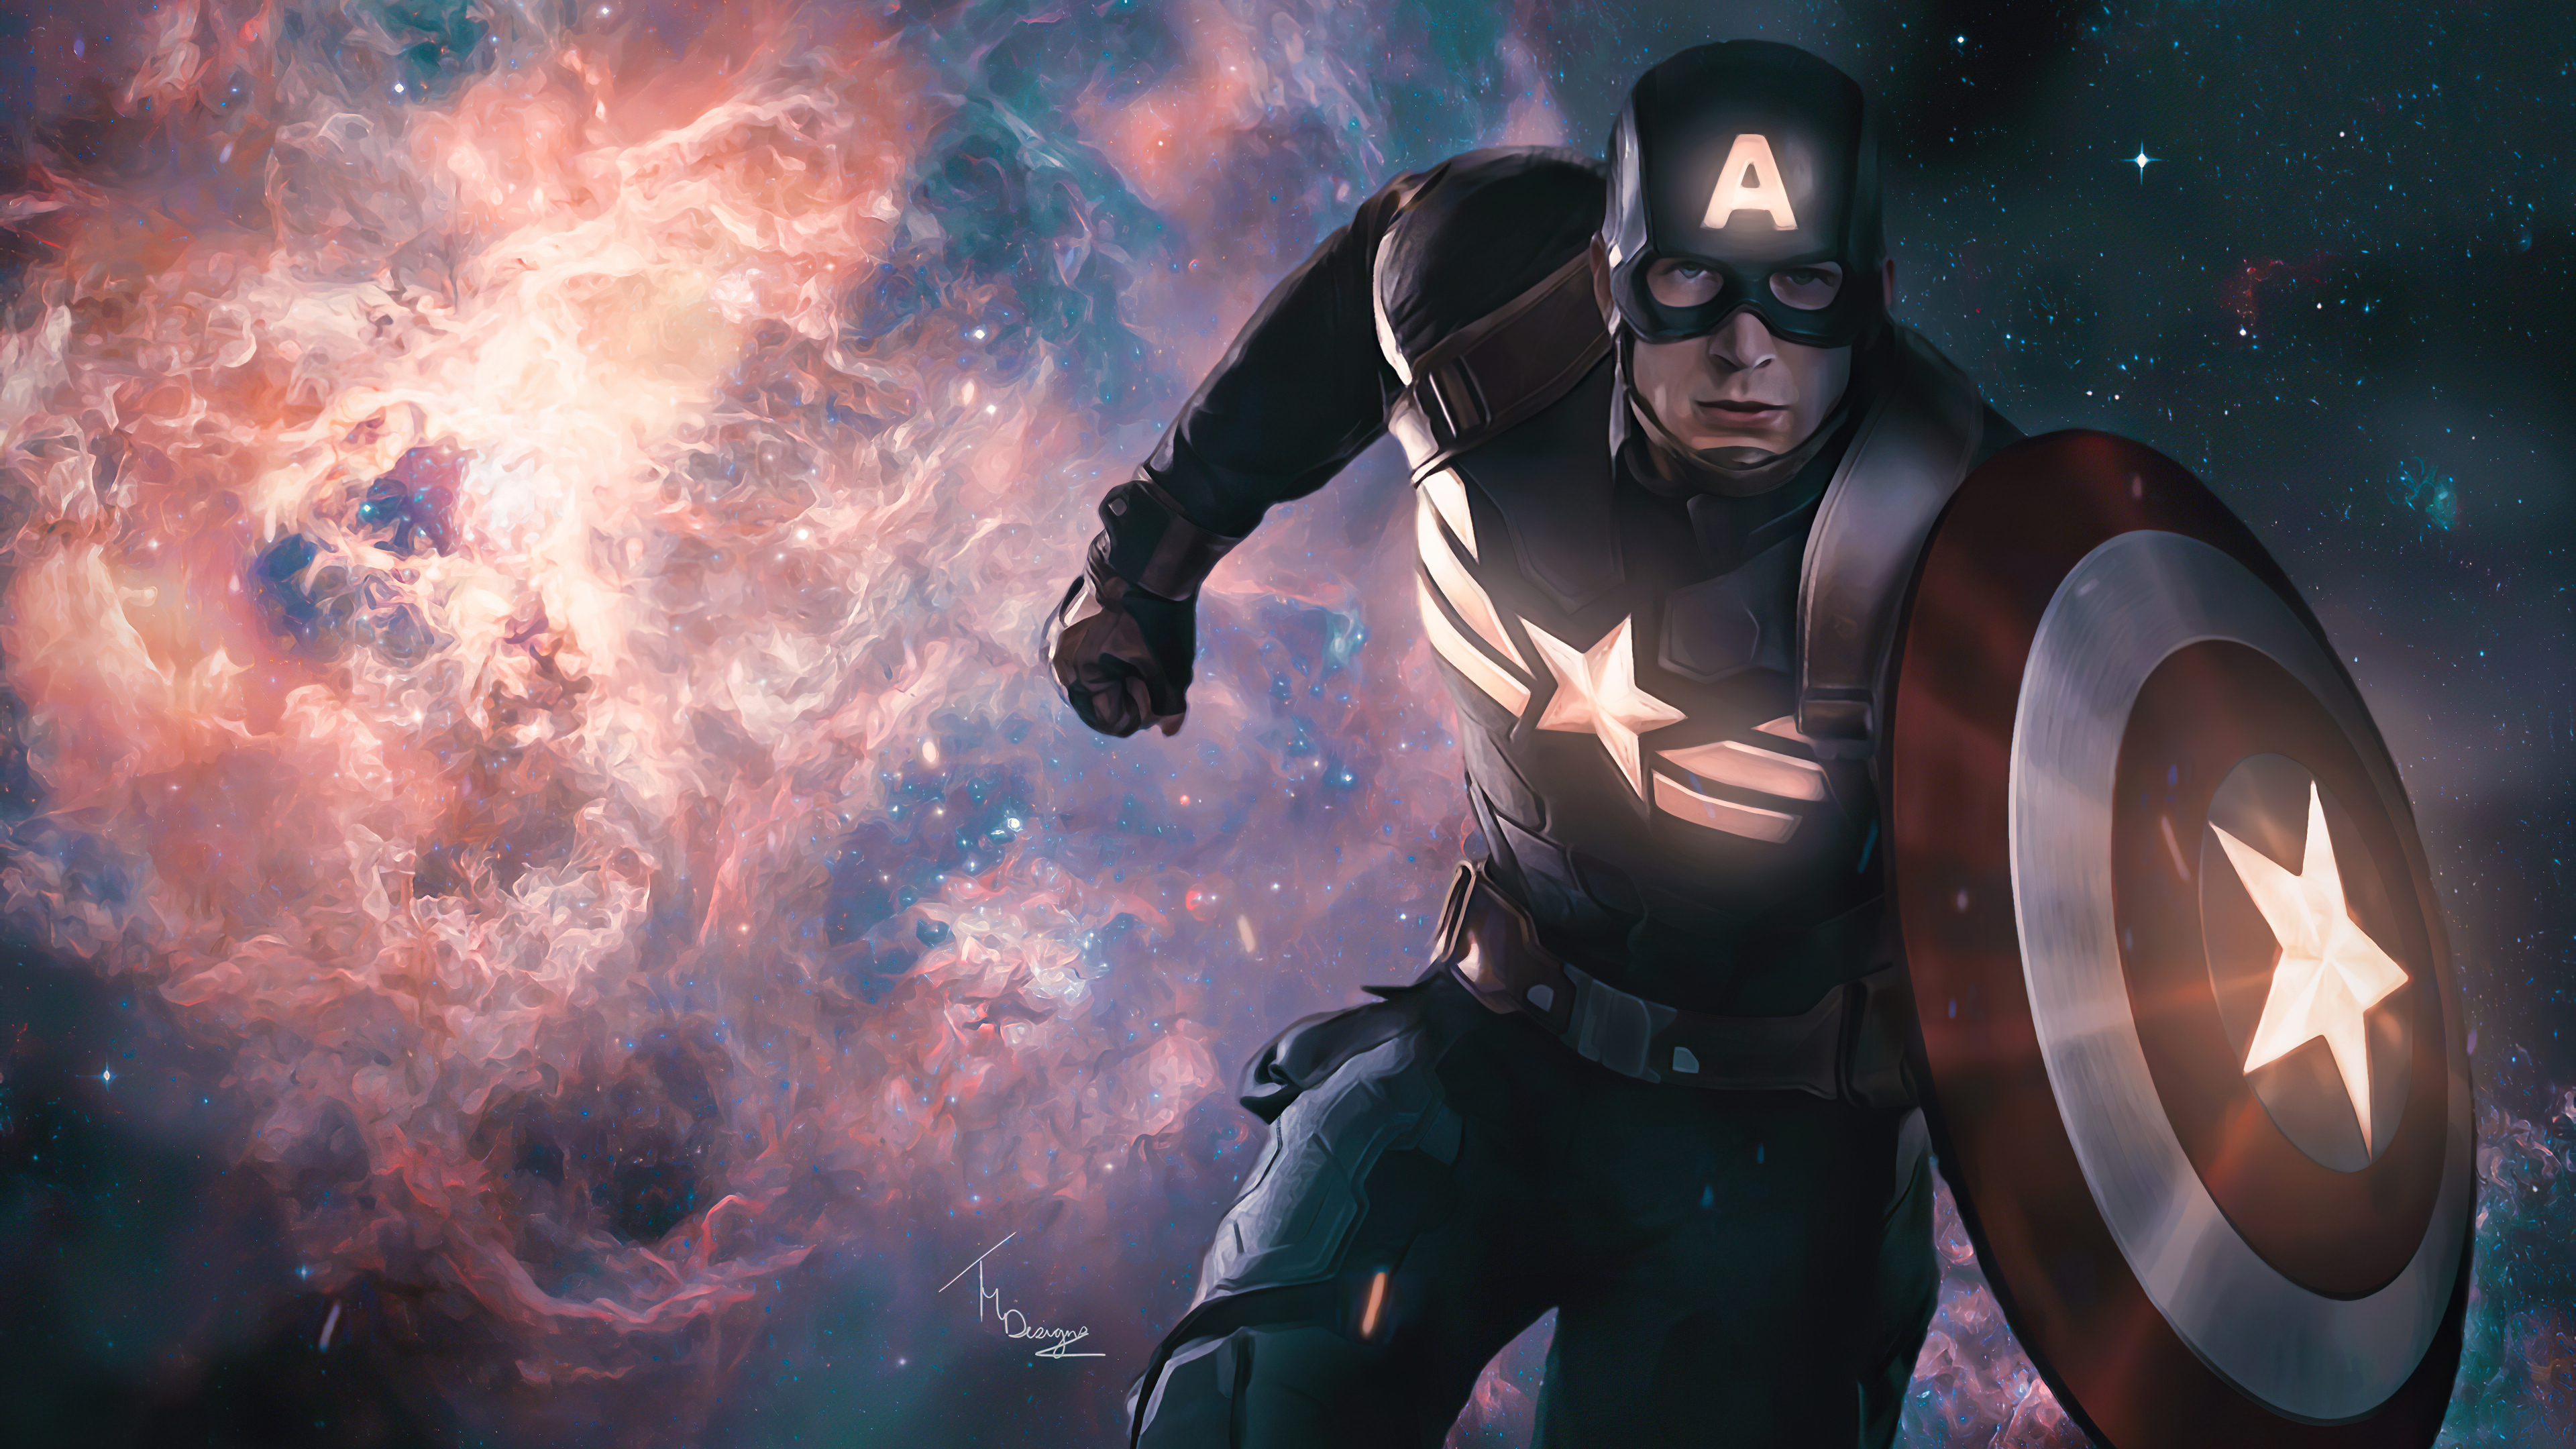 Marvel Captain America Chris Evans The Avengers Age Of Ultron Movie  Wallpaper Hd For Desktop 1920x1080  Wallpapers13com